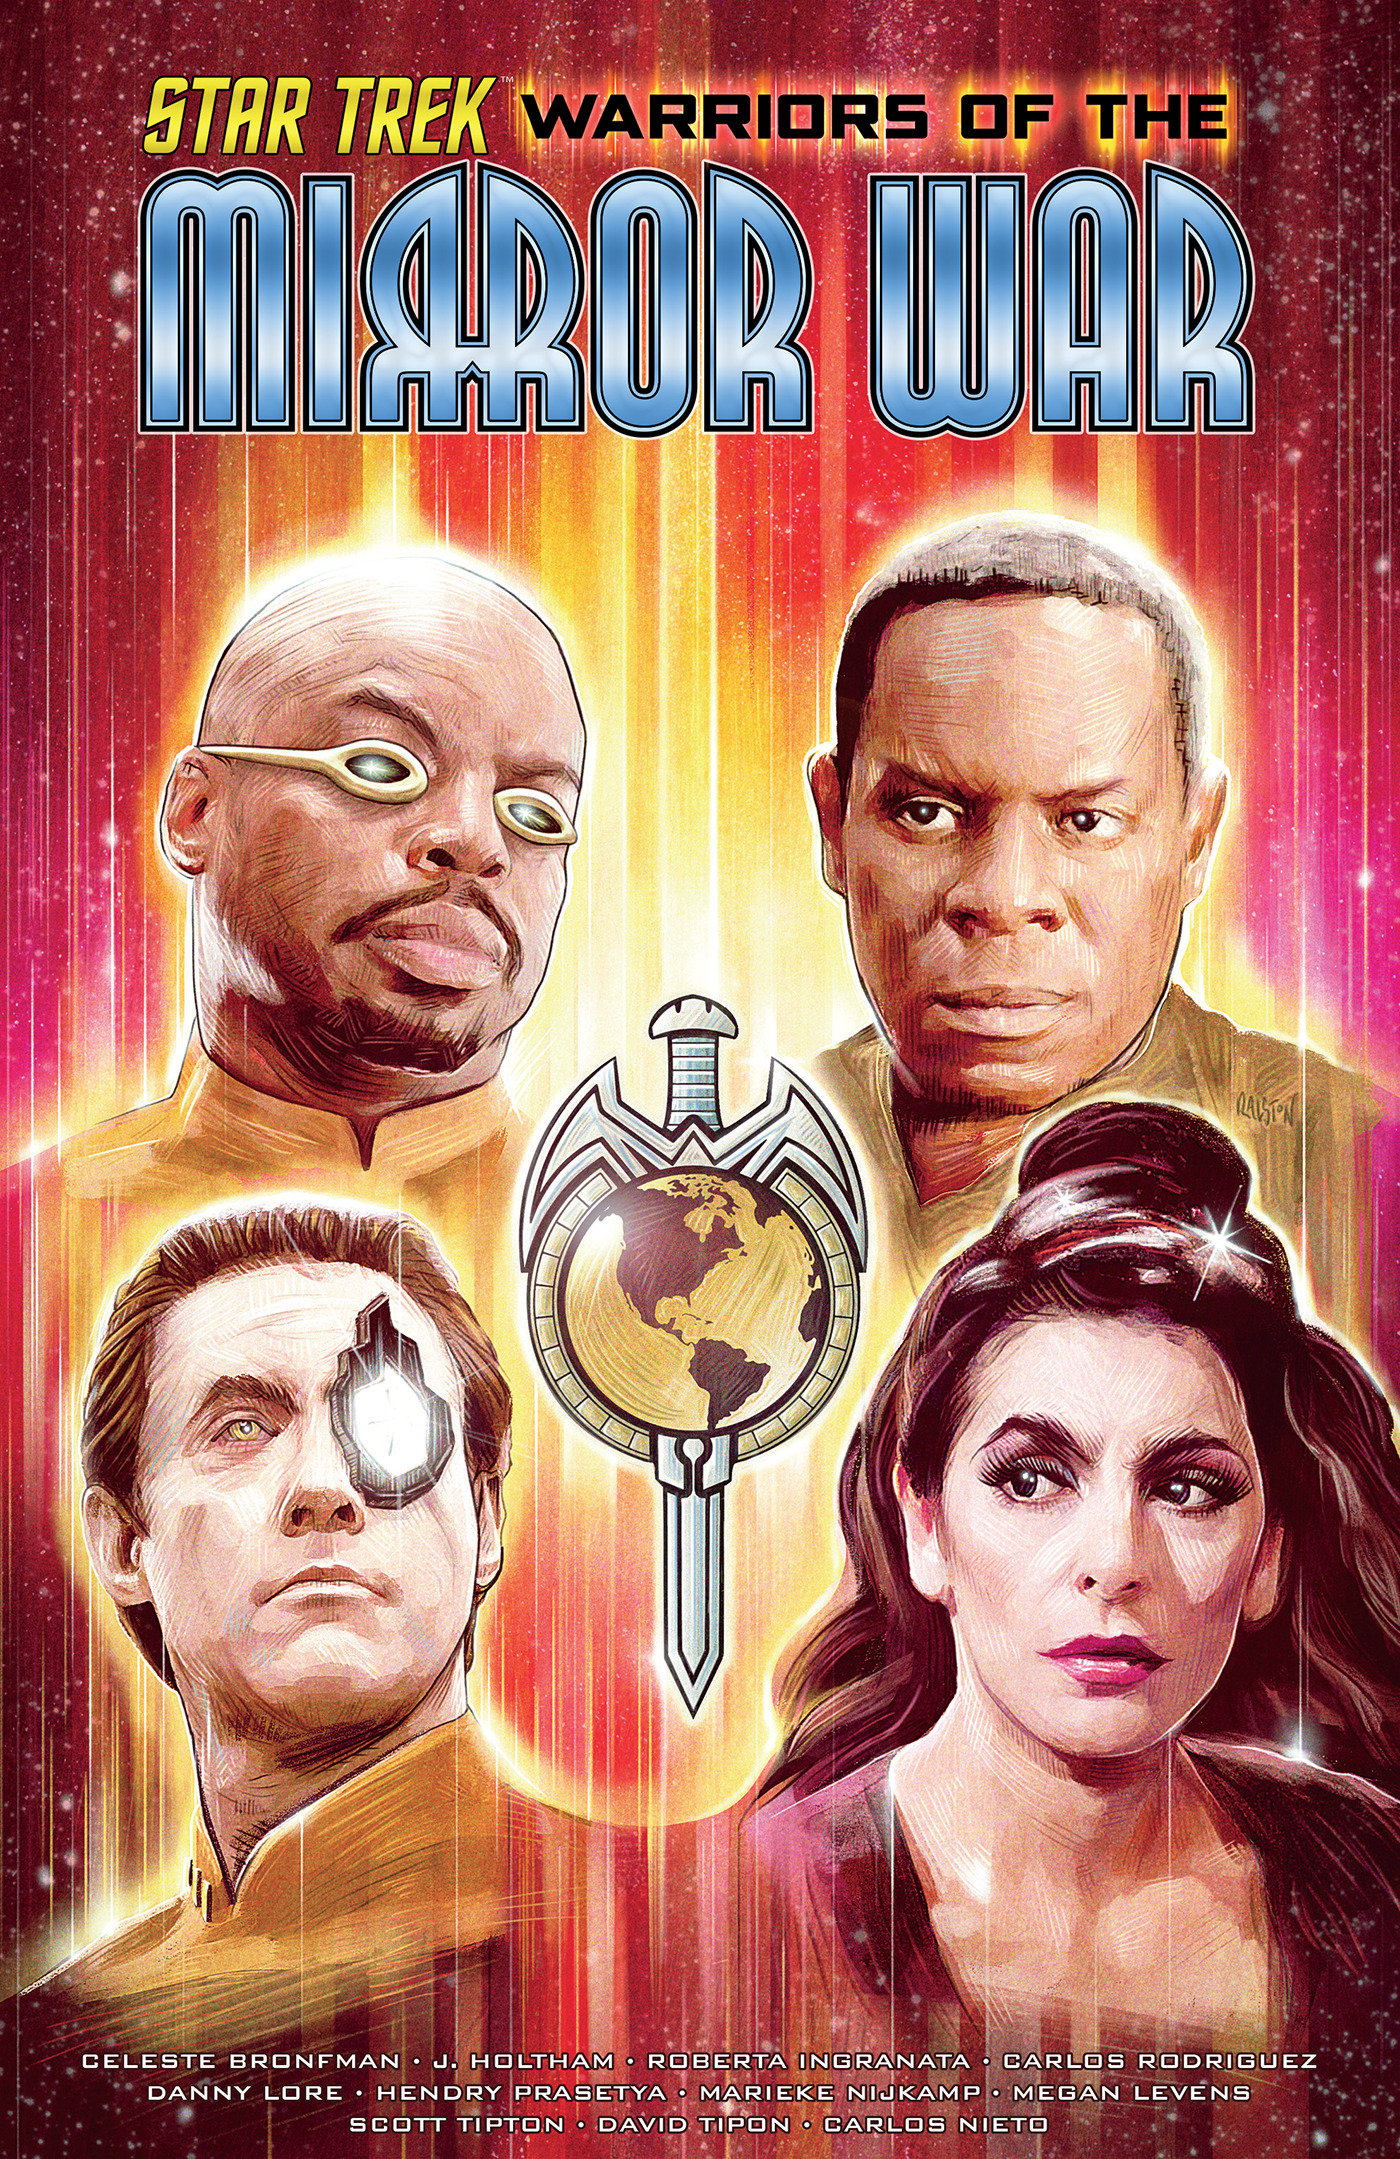 Star Trek Graphic Novel Warriors of the Mirror War